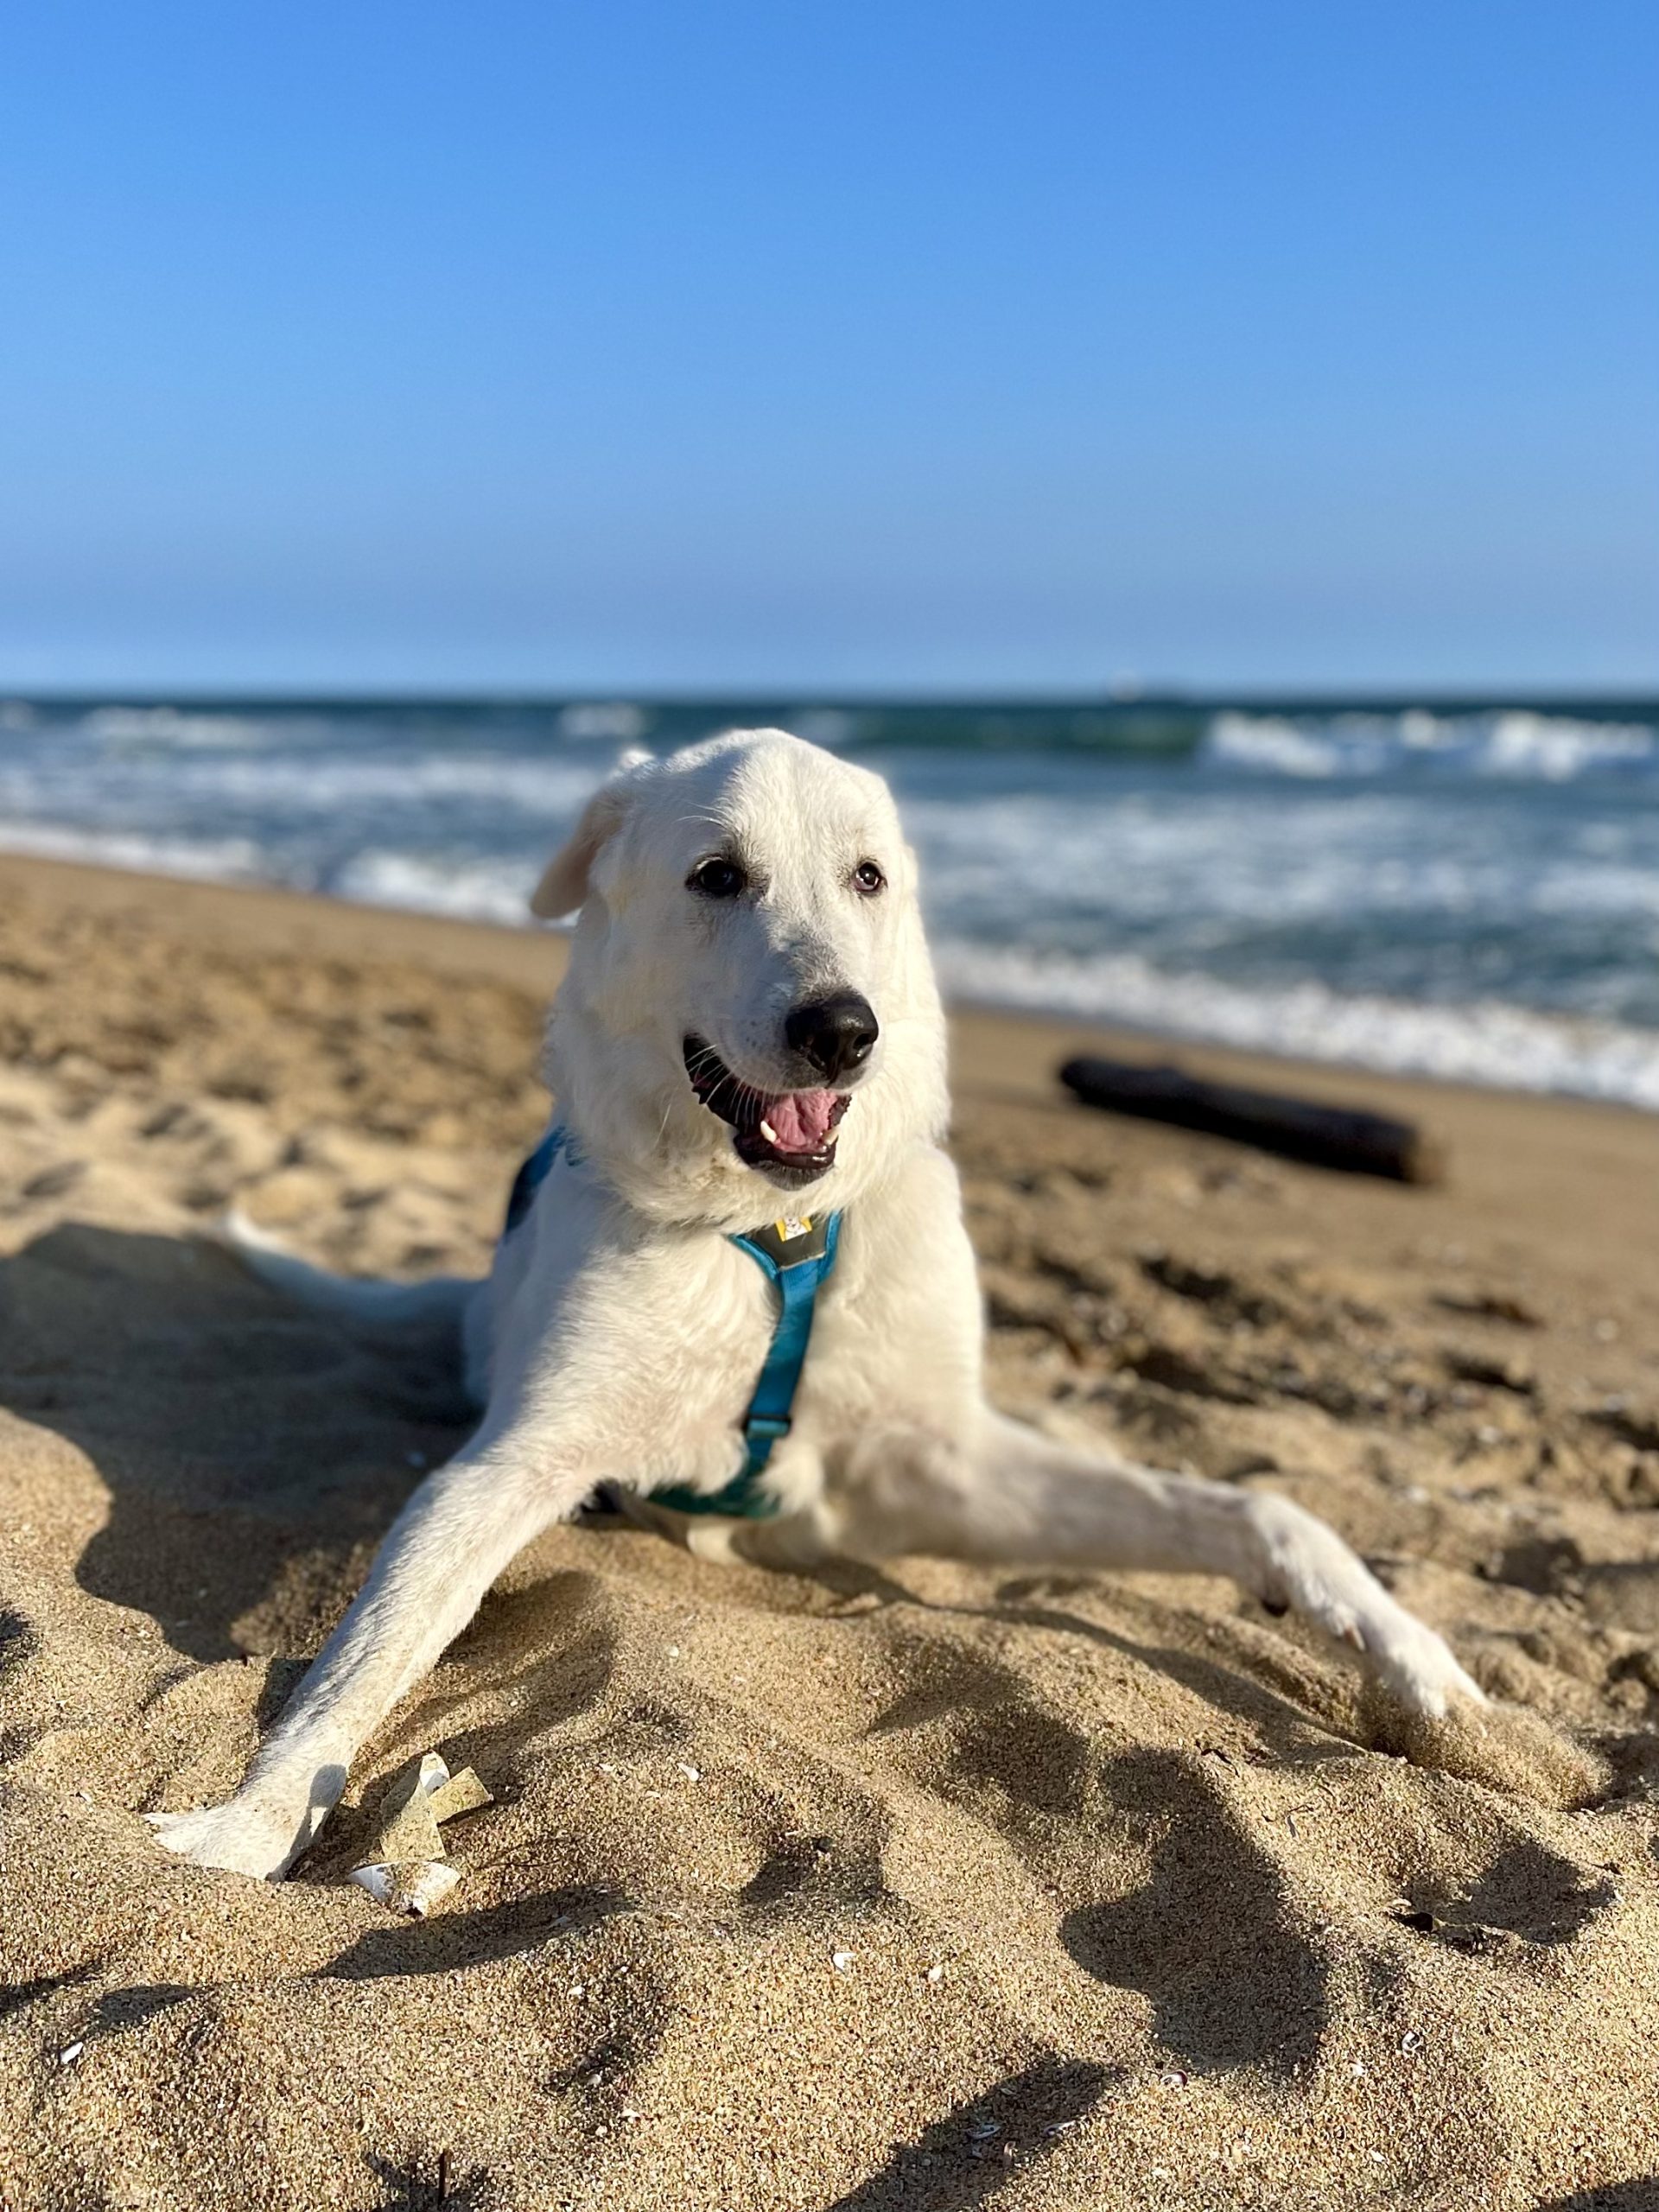 Tyson smiling on the beach